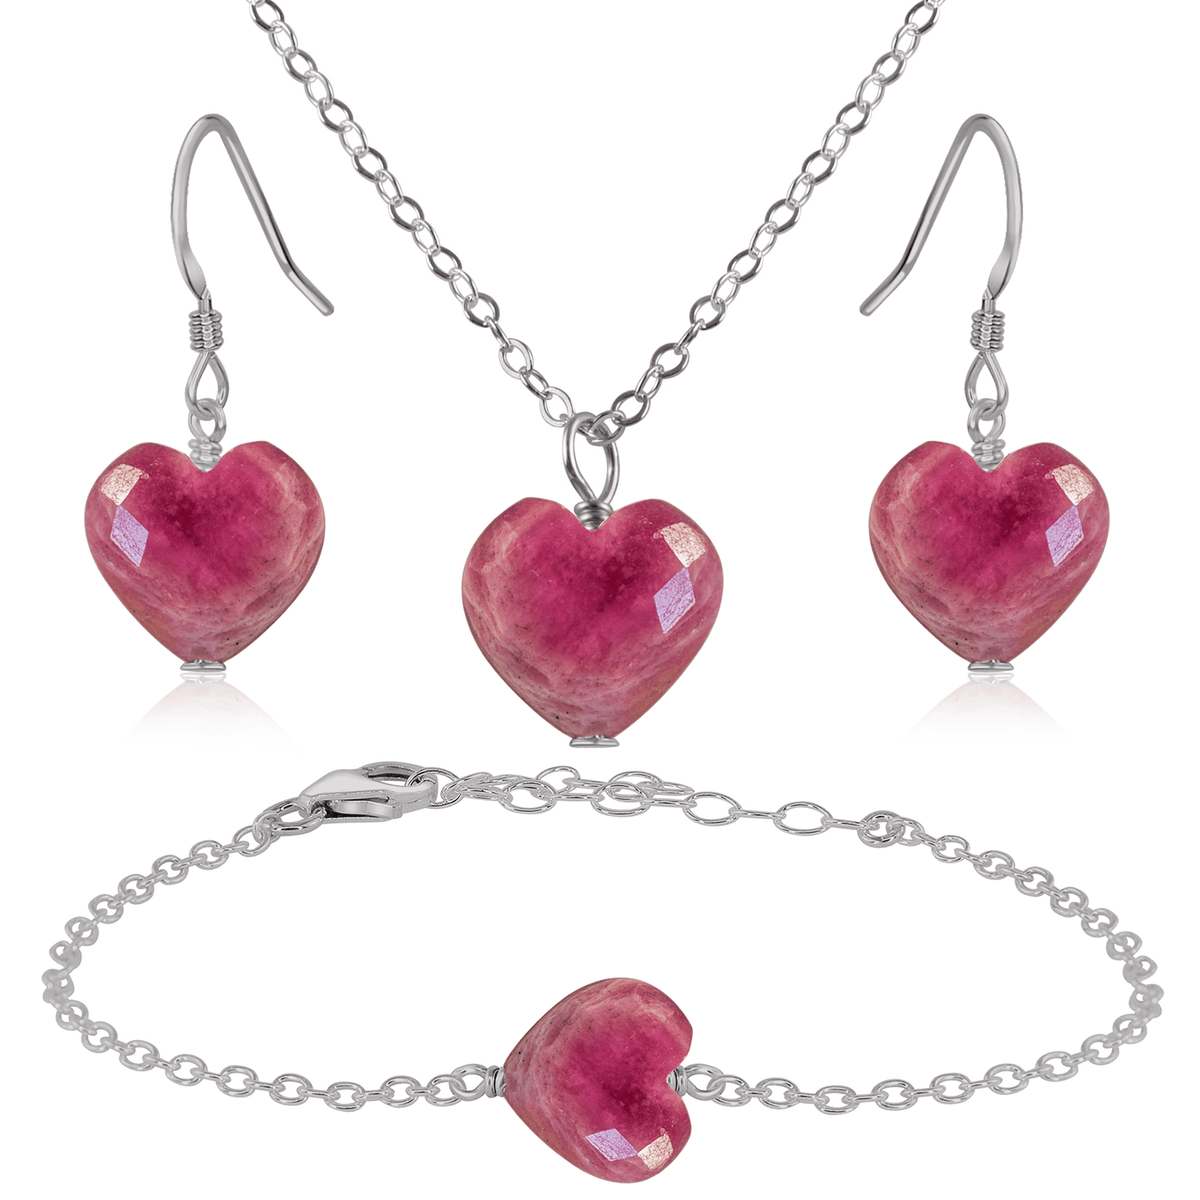 Ruby Crystal Heart Jewellery Set - Ruby Crystal Heart Jewellery Set - Stainless Steel / Cable / Necklace & Earrings & Bracelet - Luna Tide Handmade Crystal Jewellery